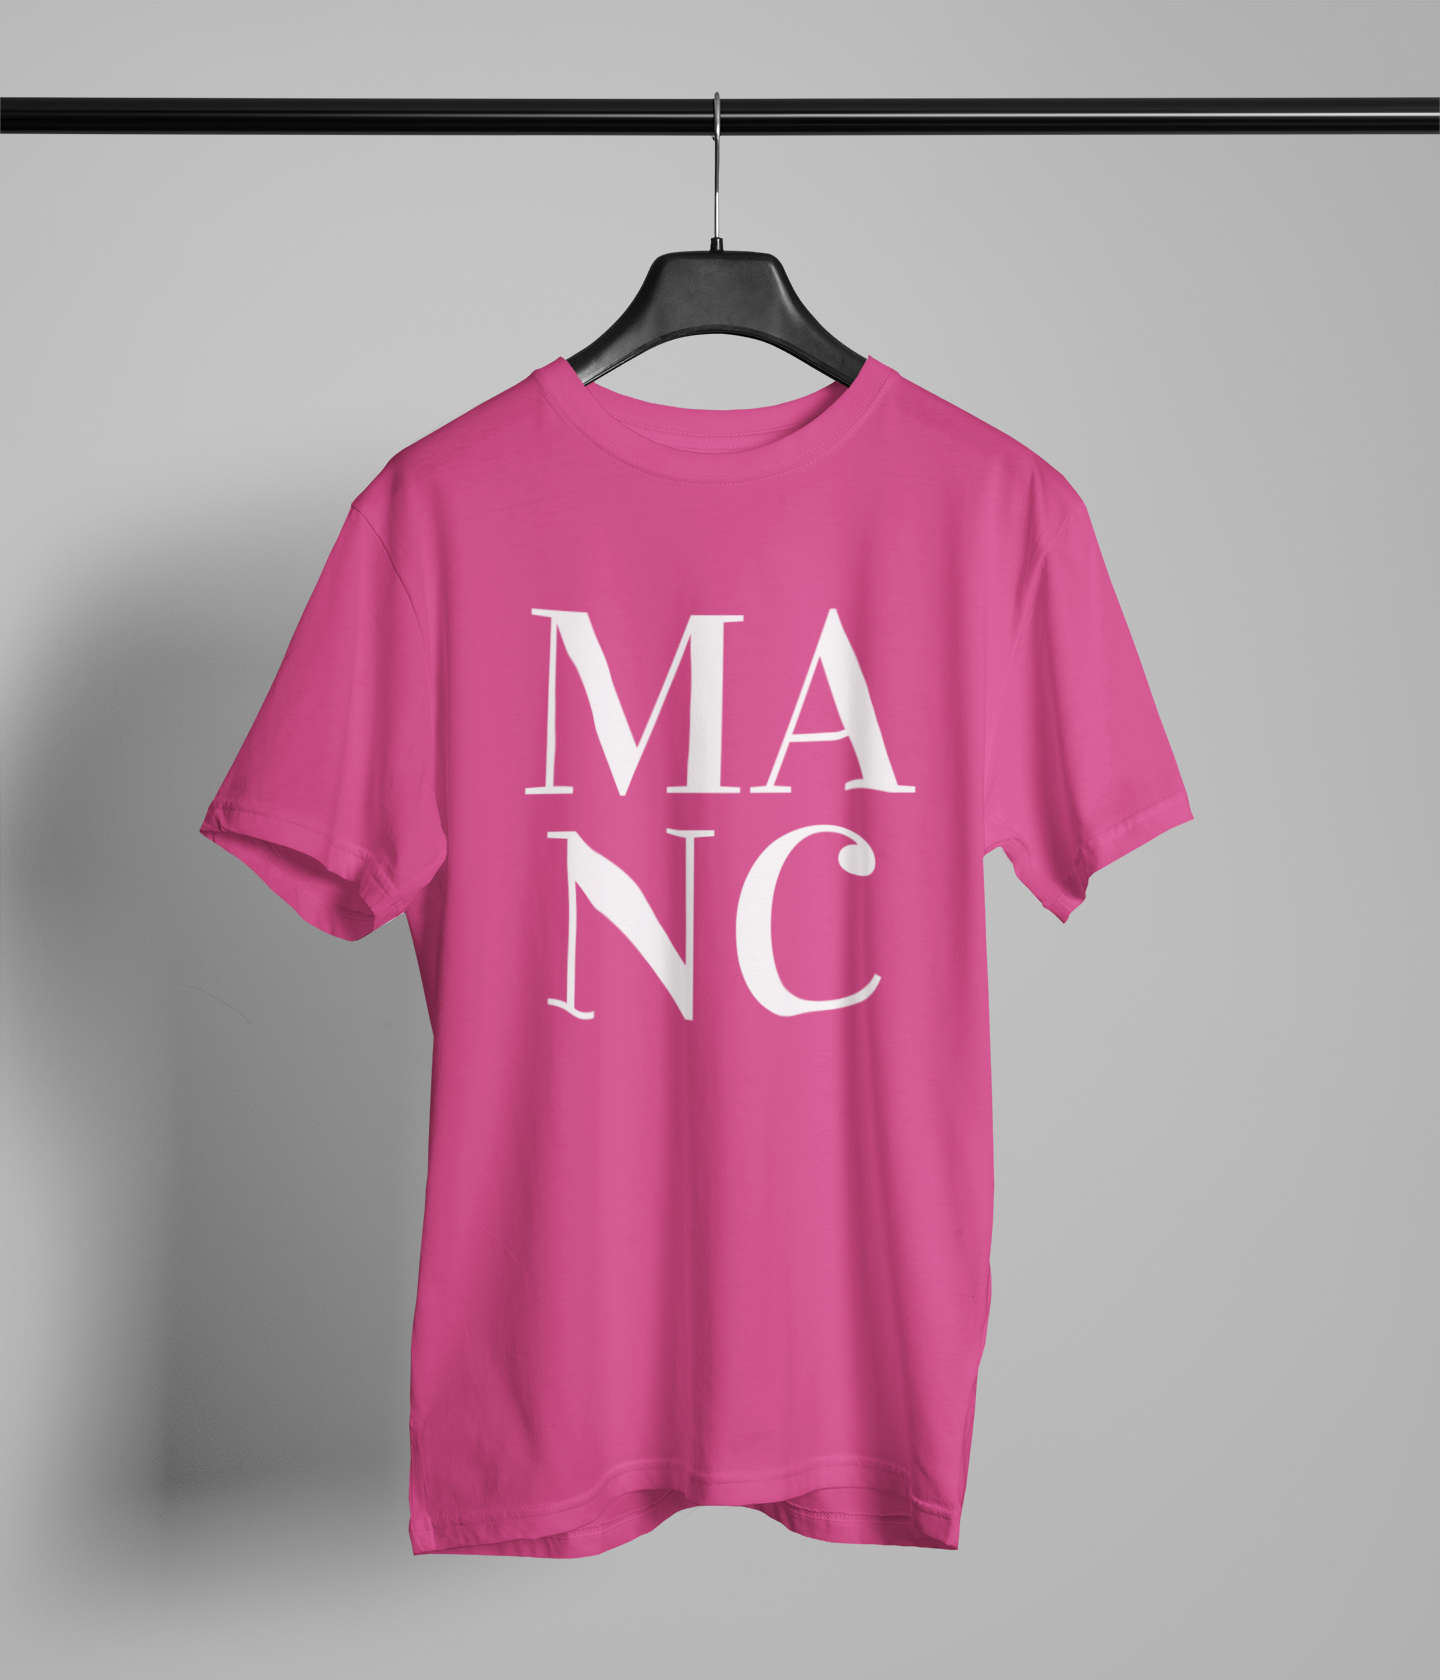 MANC Northern Slang Manchester T-Shirt Unisex